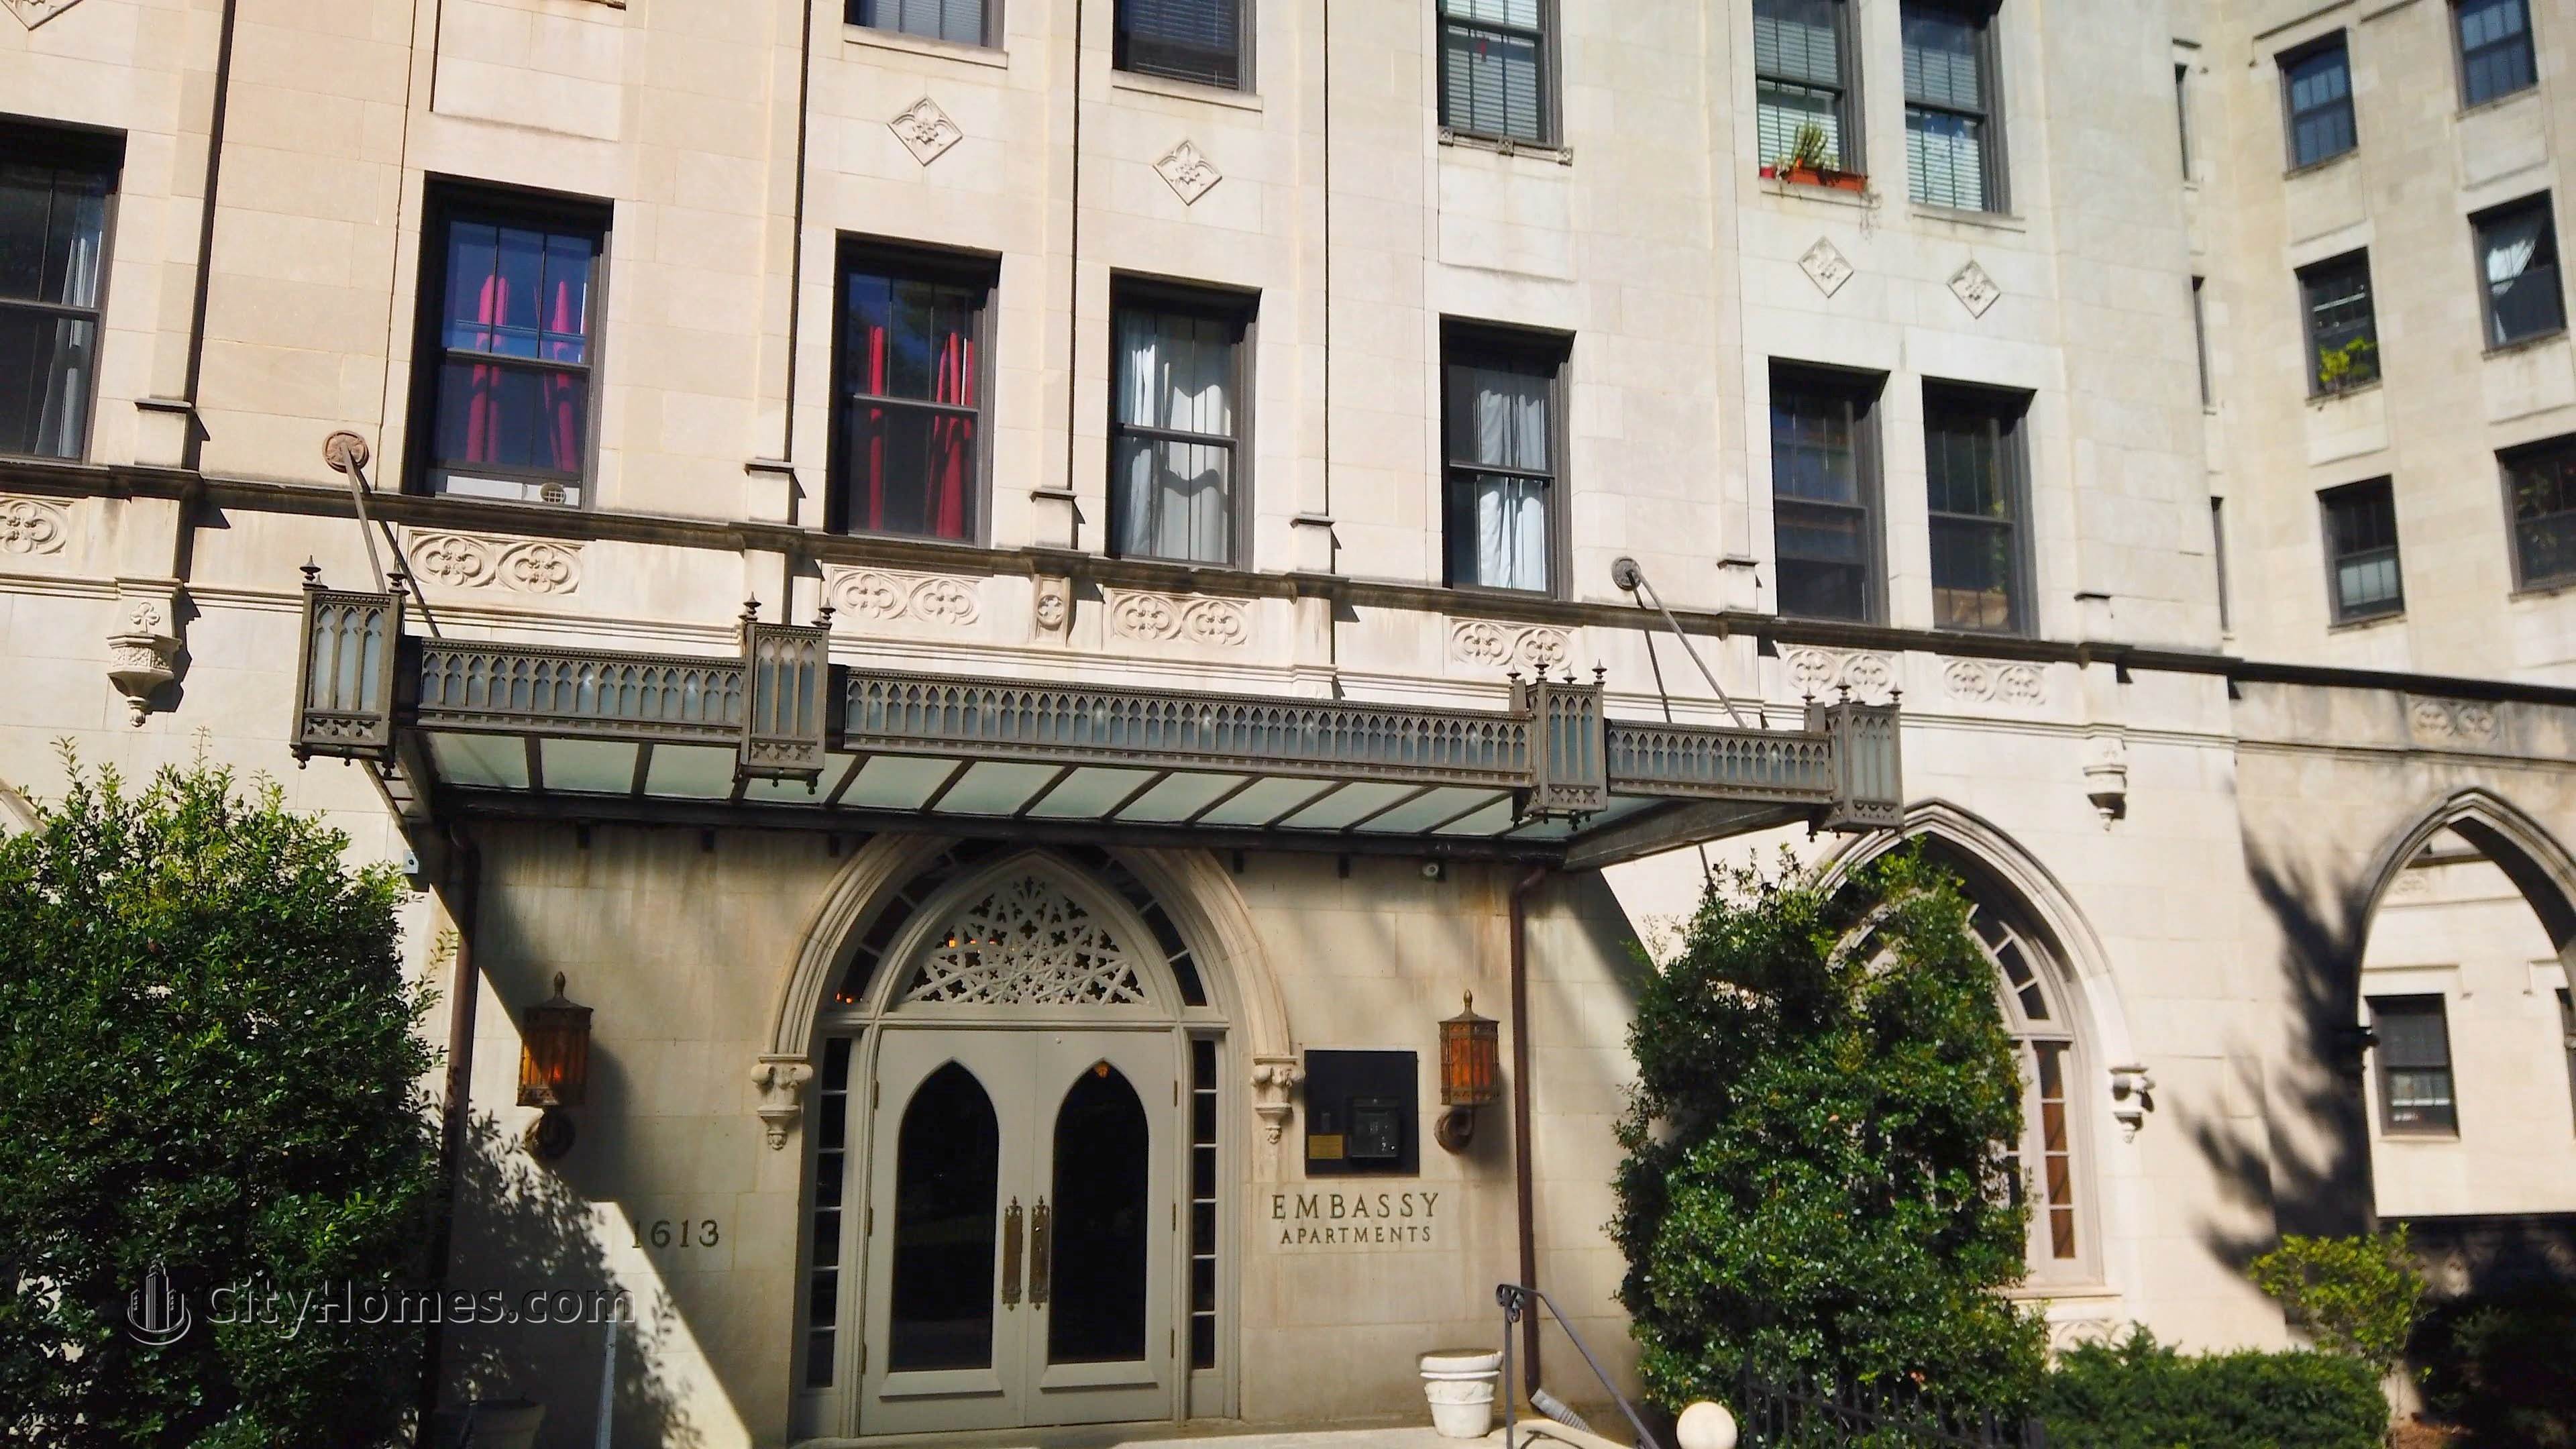 The Embassy building at 1613 Harvard St NW, Mount Pleasant, Washington, DC 20009